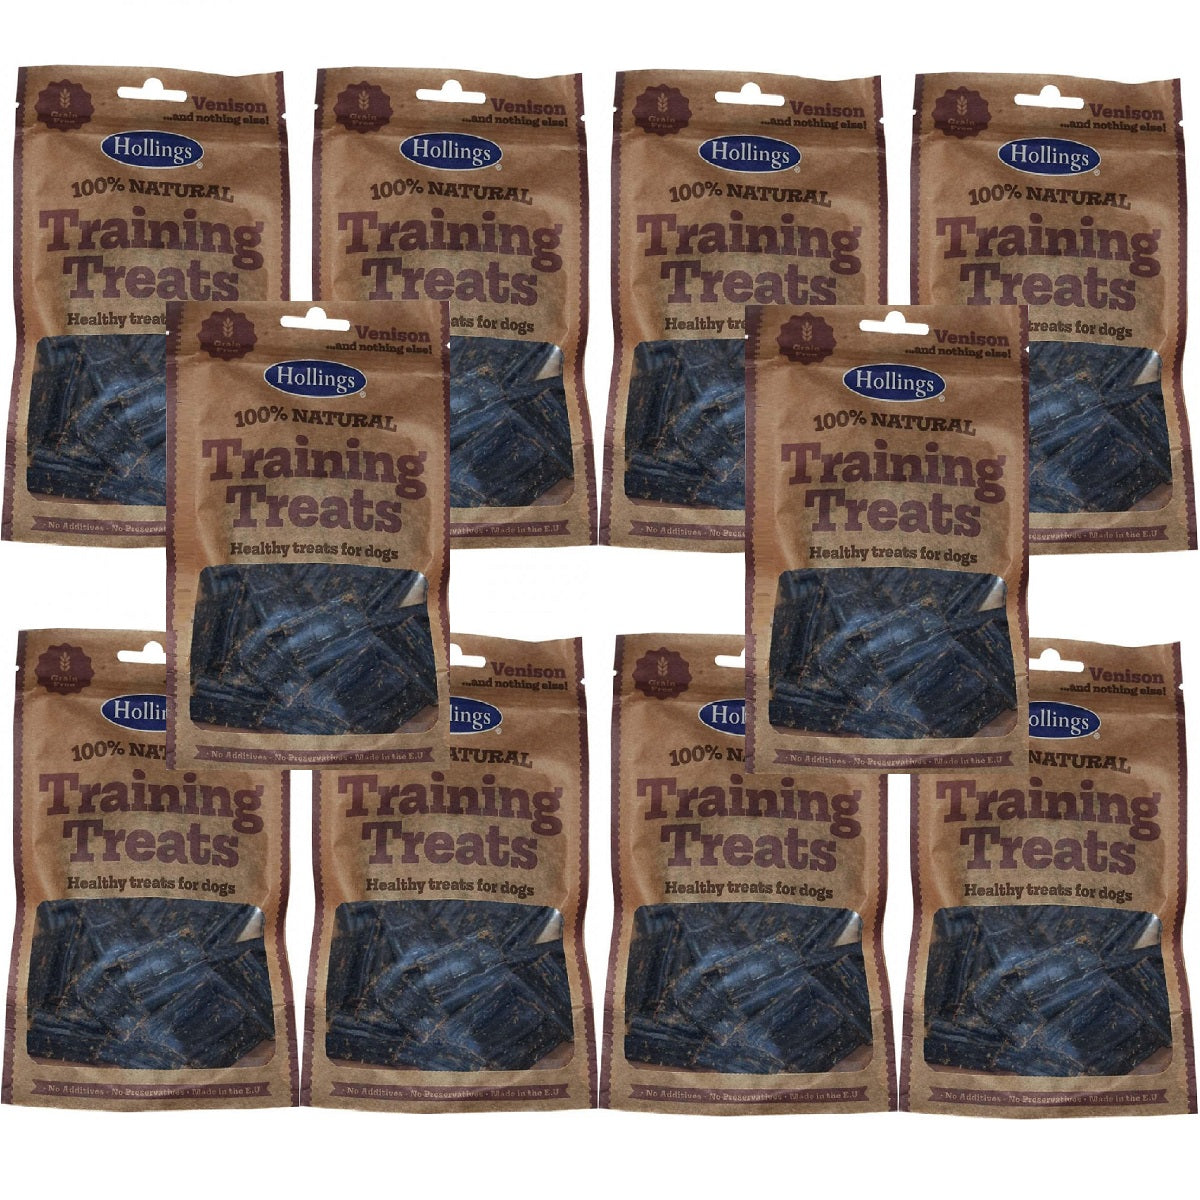 Hollings - Training Treats (75g)